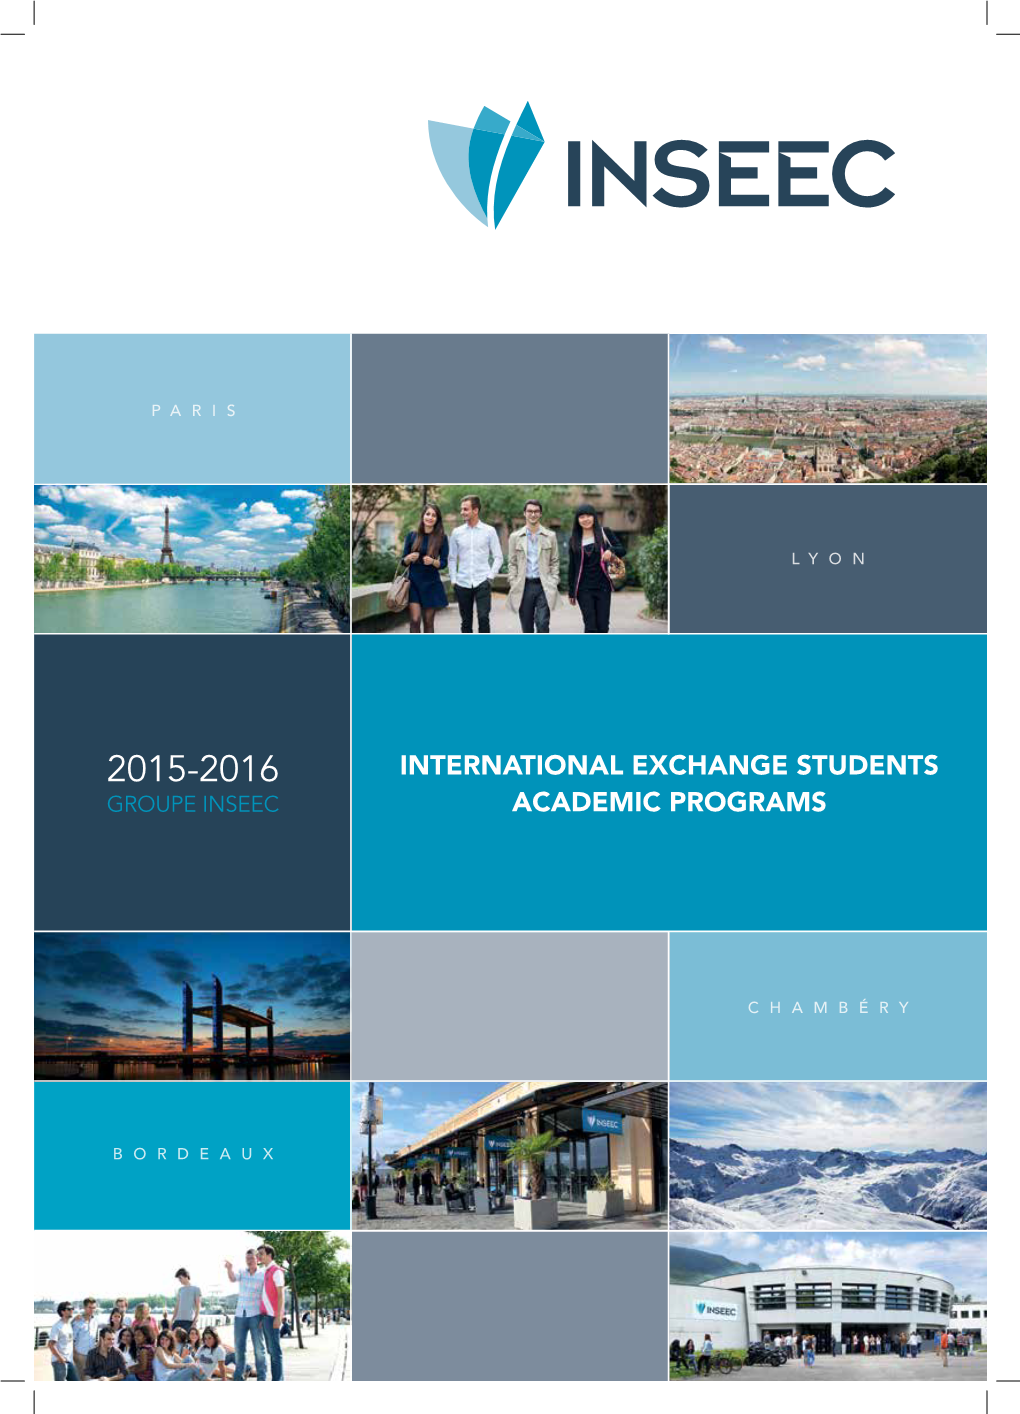 International Exchange Students Academic Programs: 2015-2016 Groupe INSEEC View of Lyon